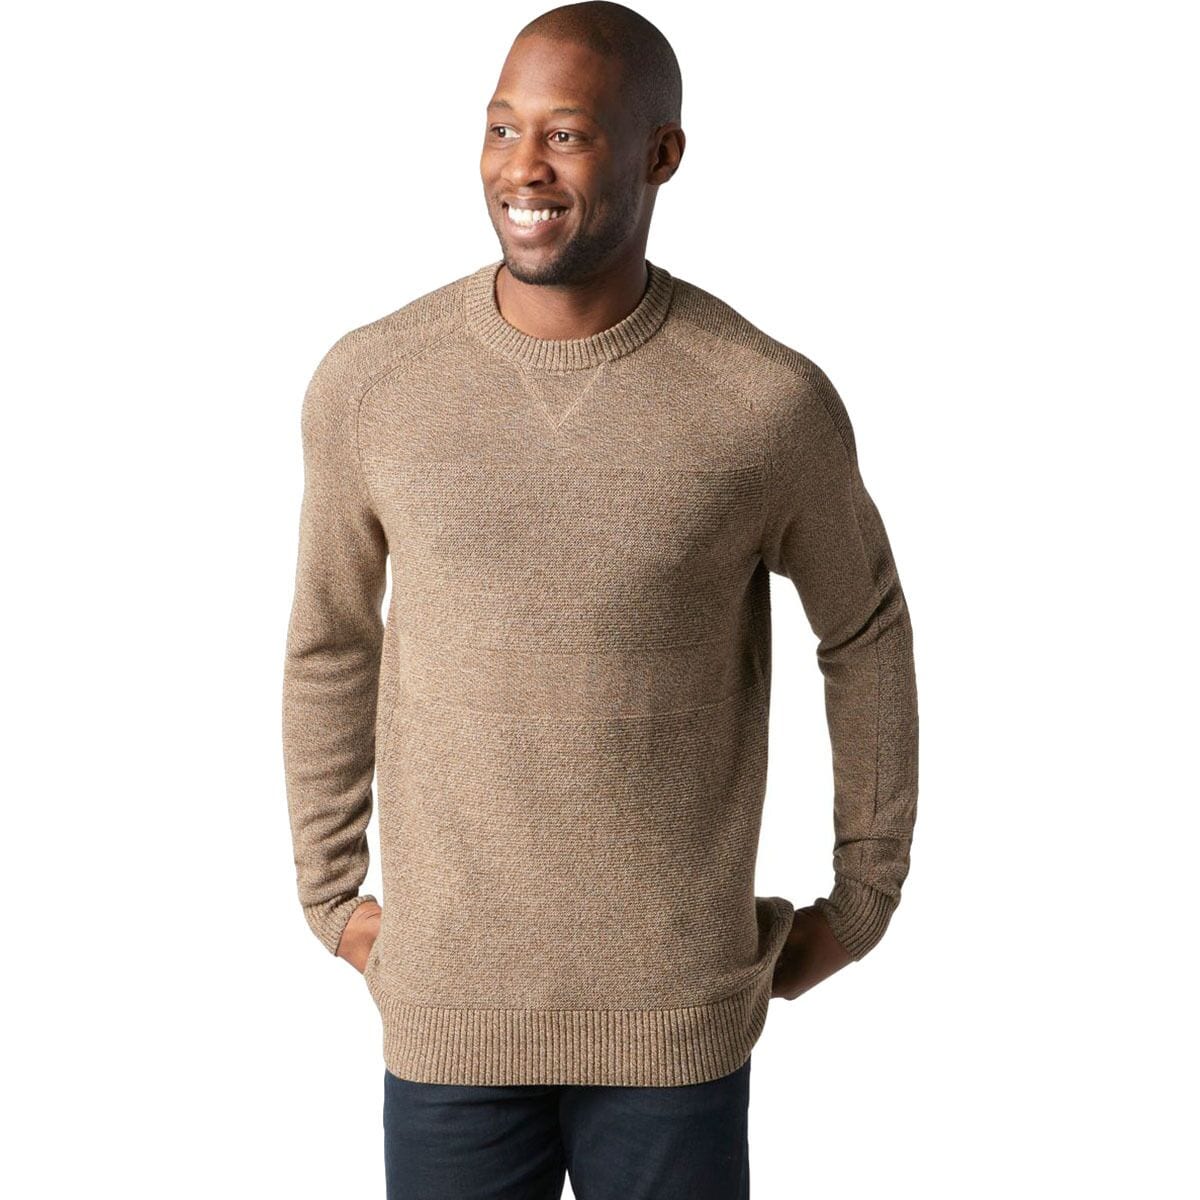 Smartwool Ripple Ridge Crew Sweater - Men's - Clothing